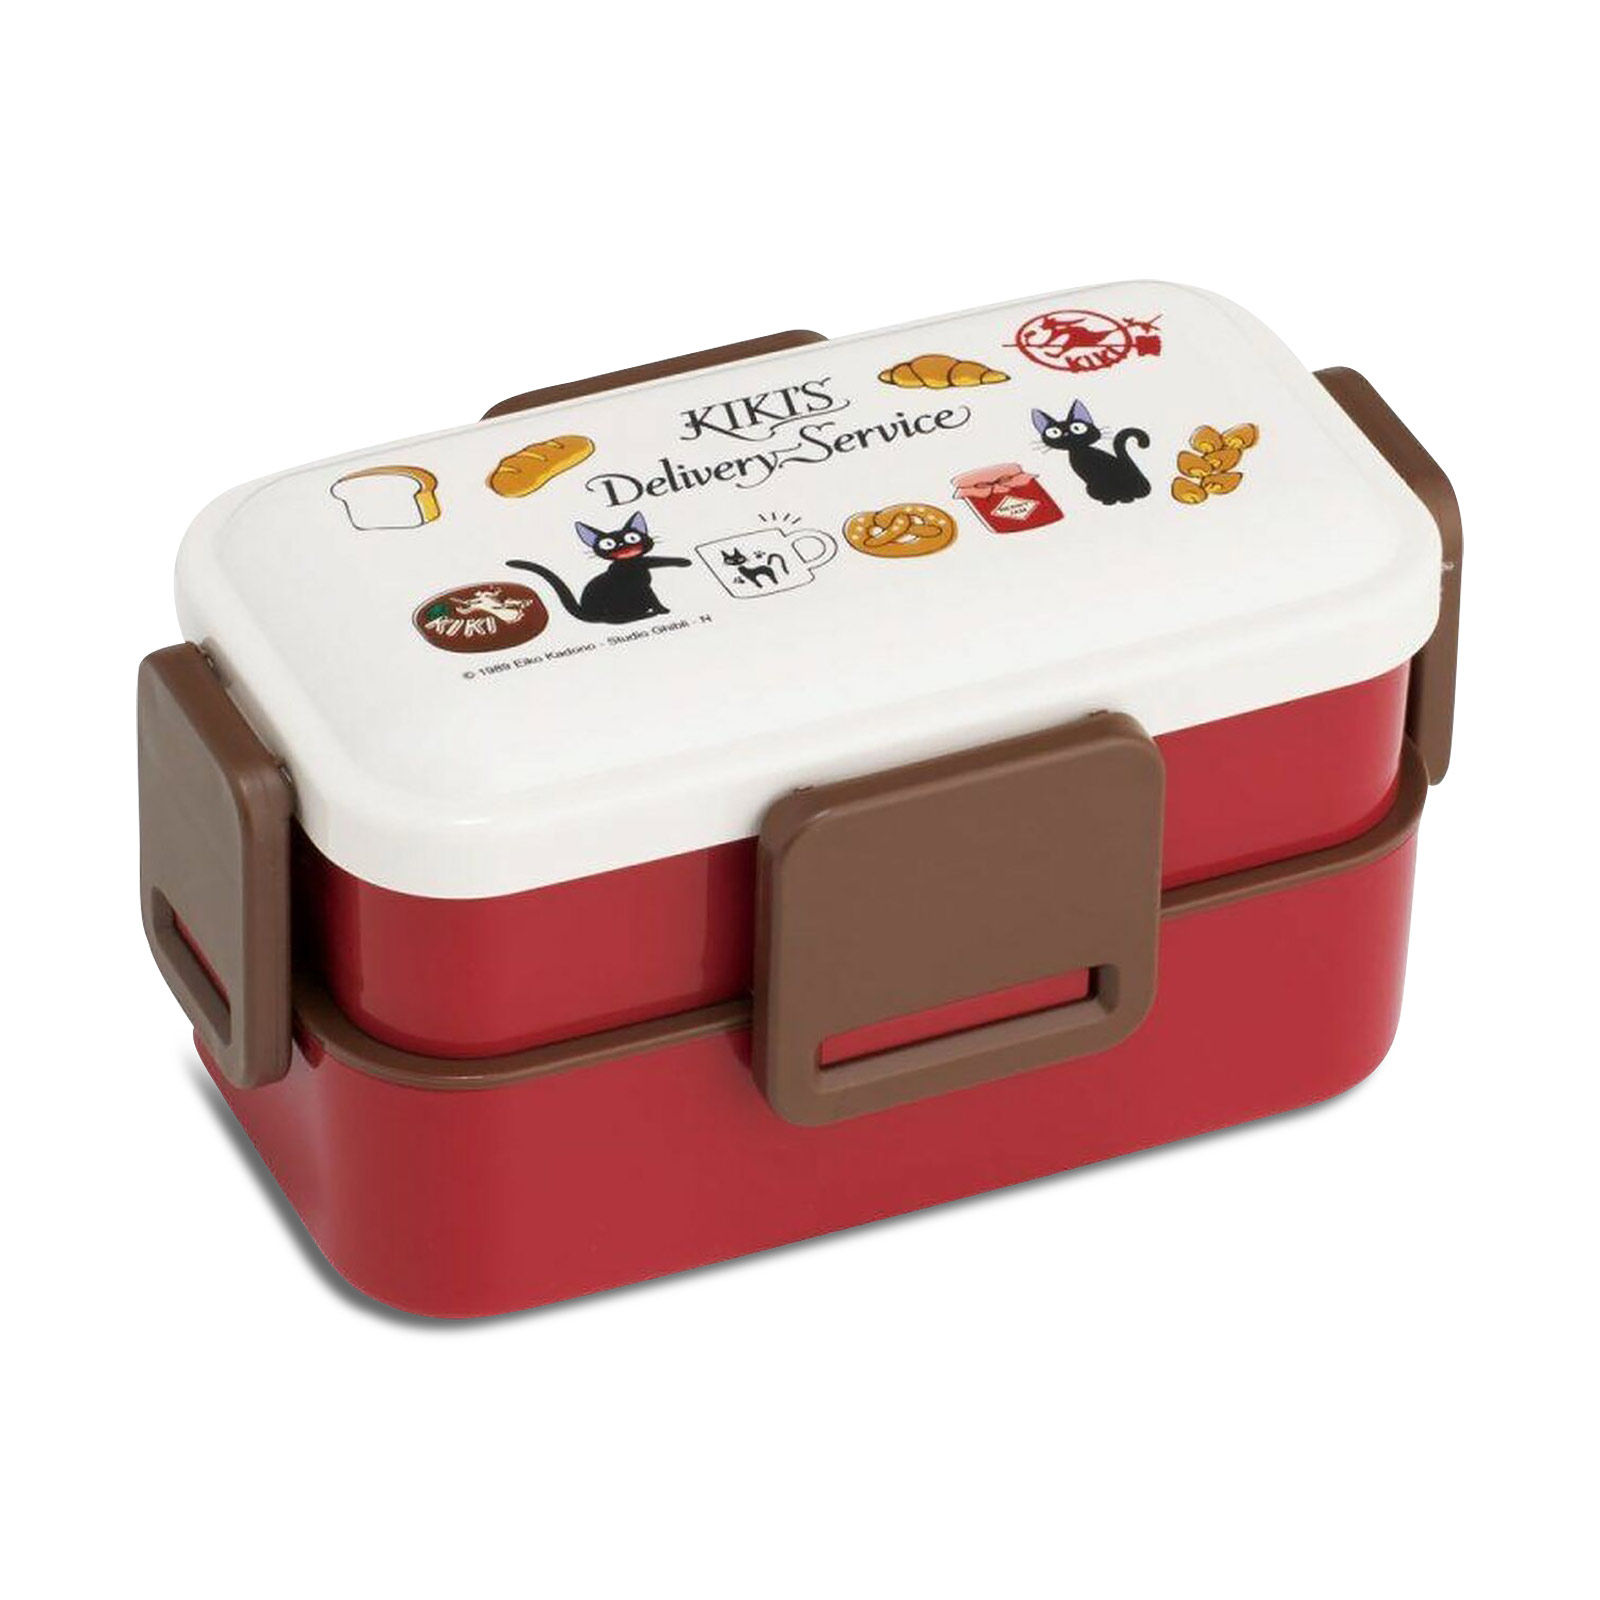 Kiki's Kleine Bezorgservice - Bakkerij Lunchbox